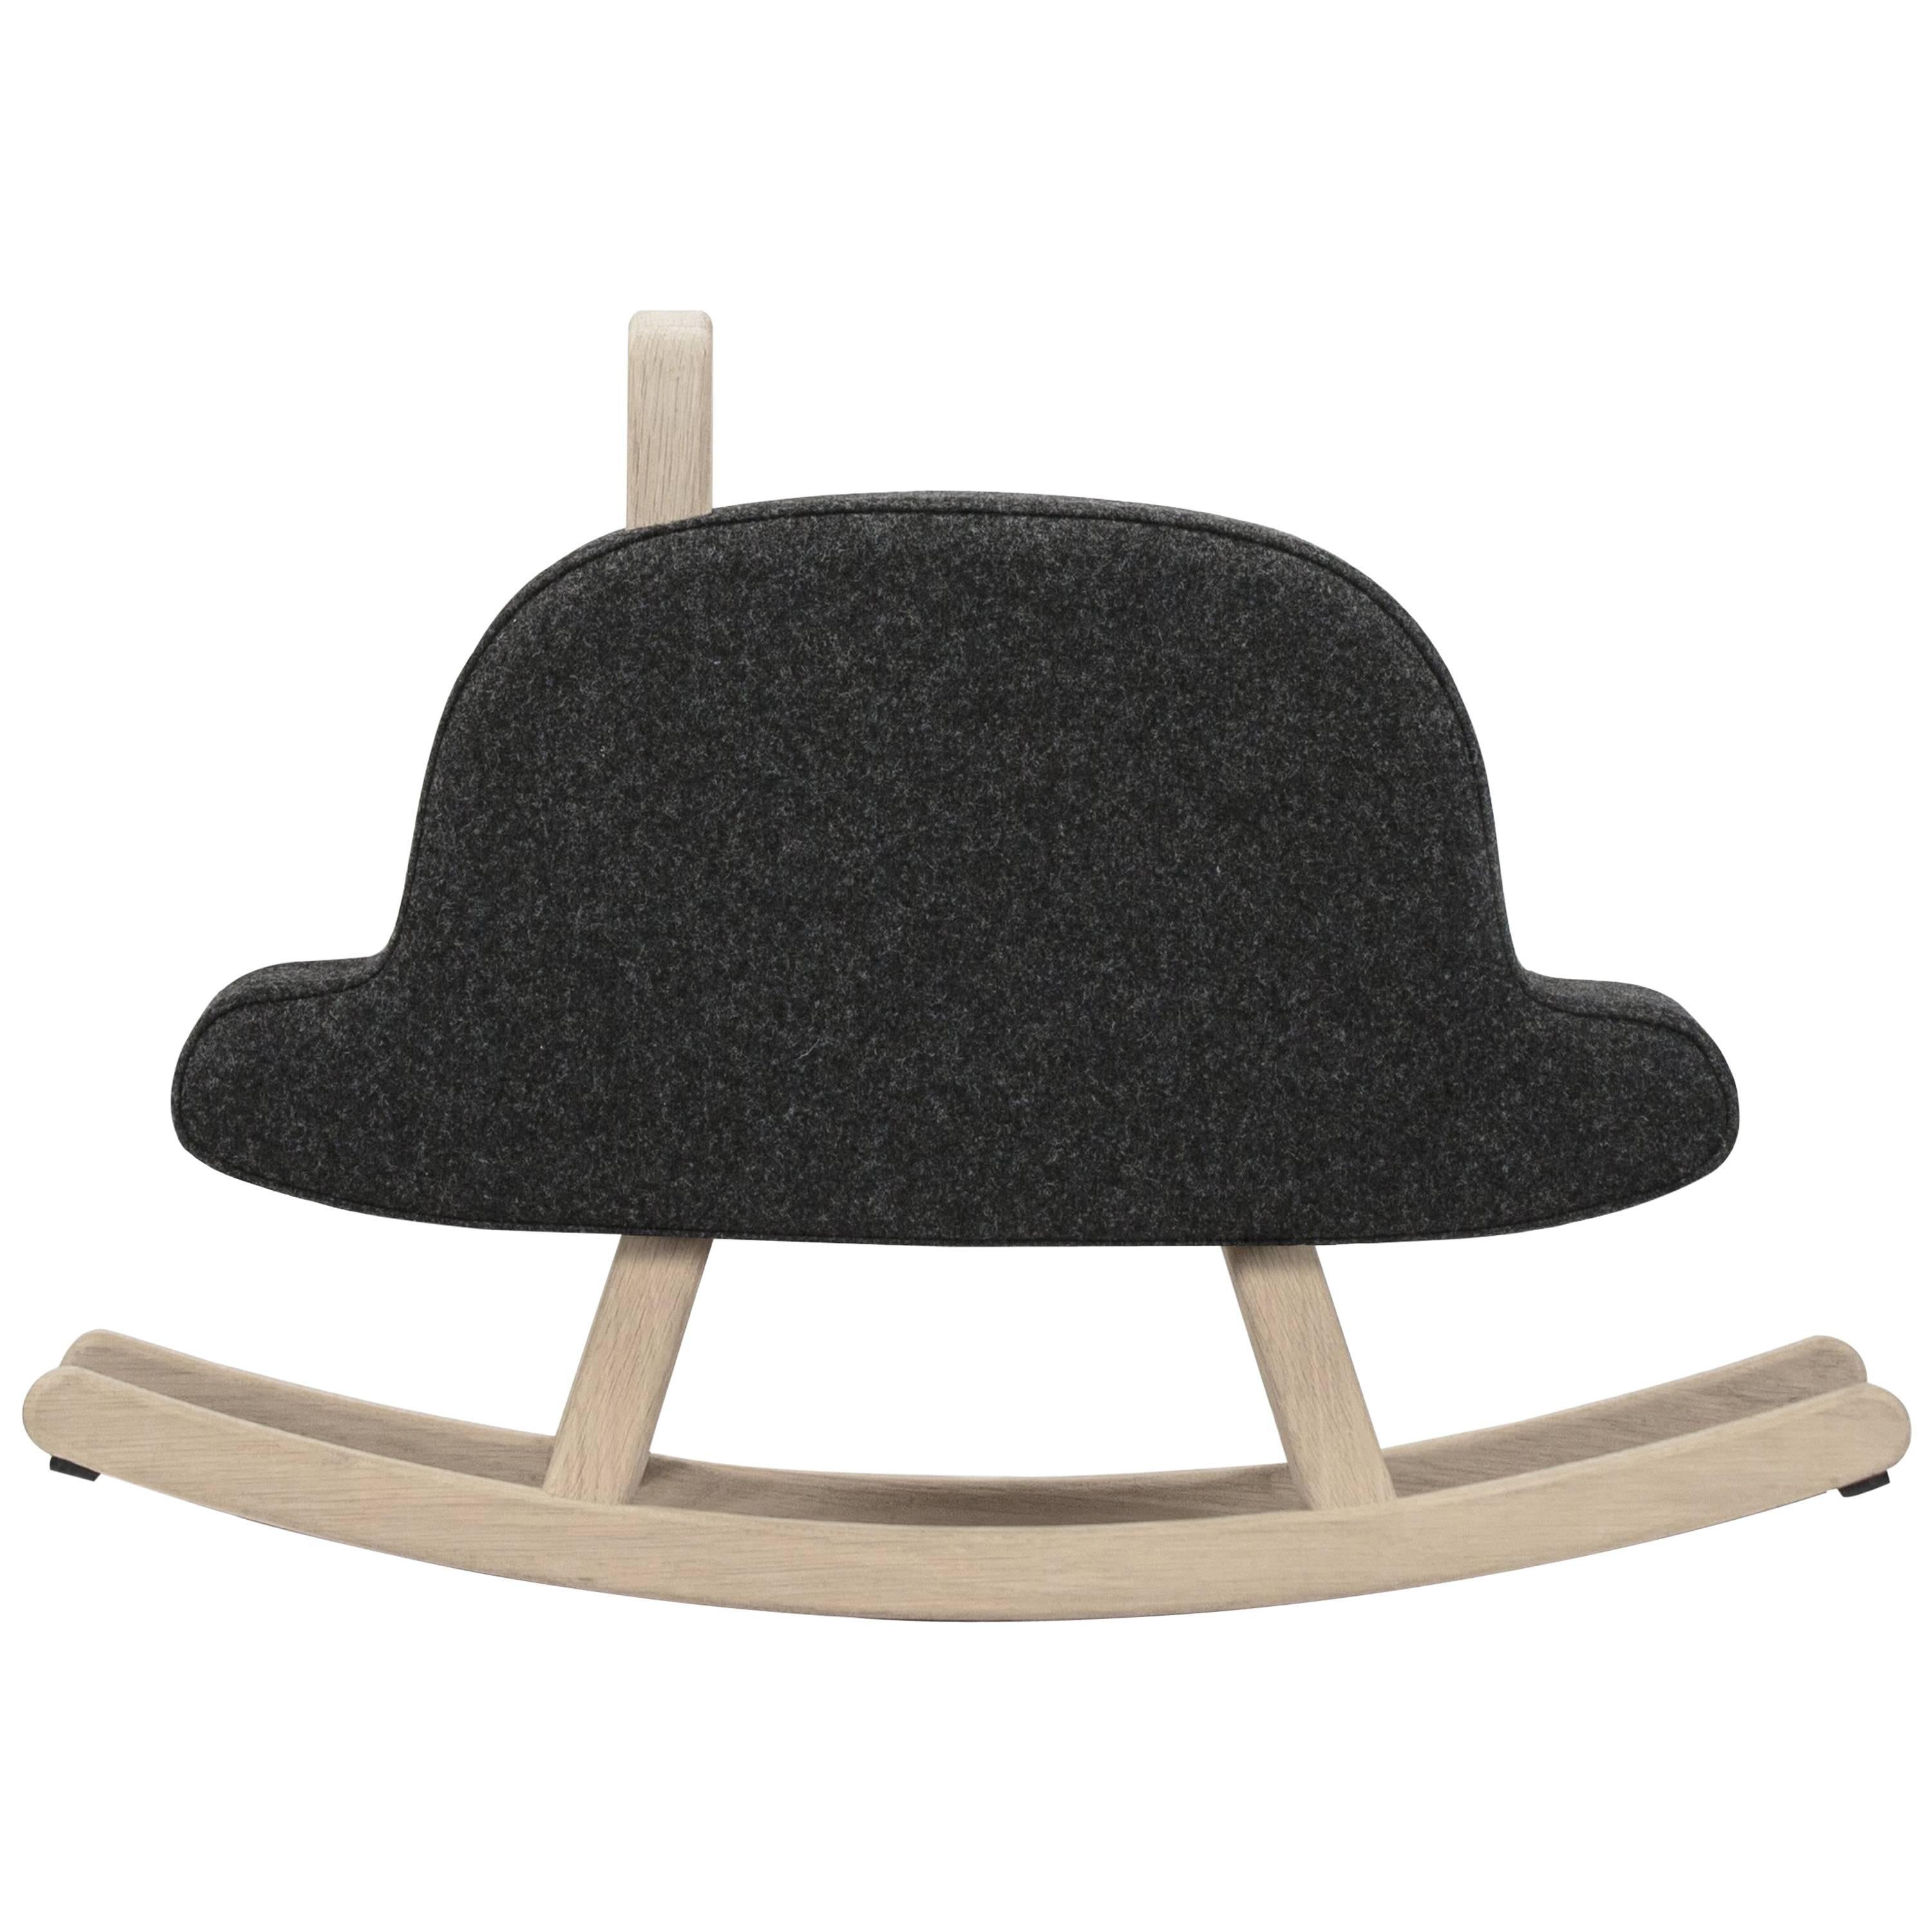 Iconic Bowler Hat Child Rocker by Maison Deux For Sale